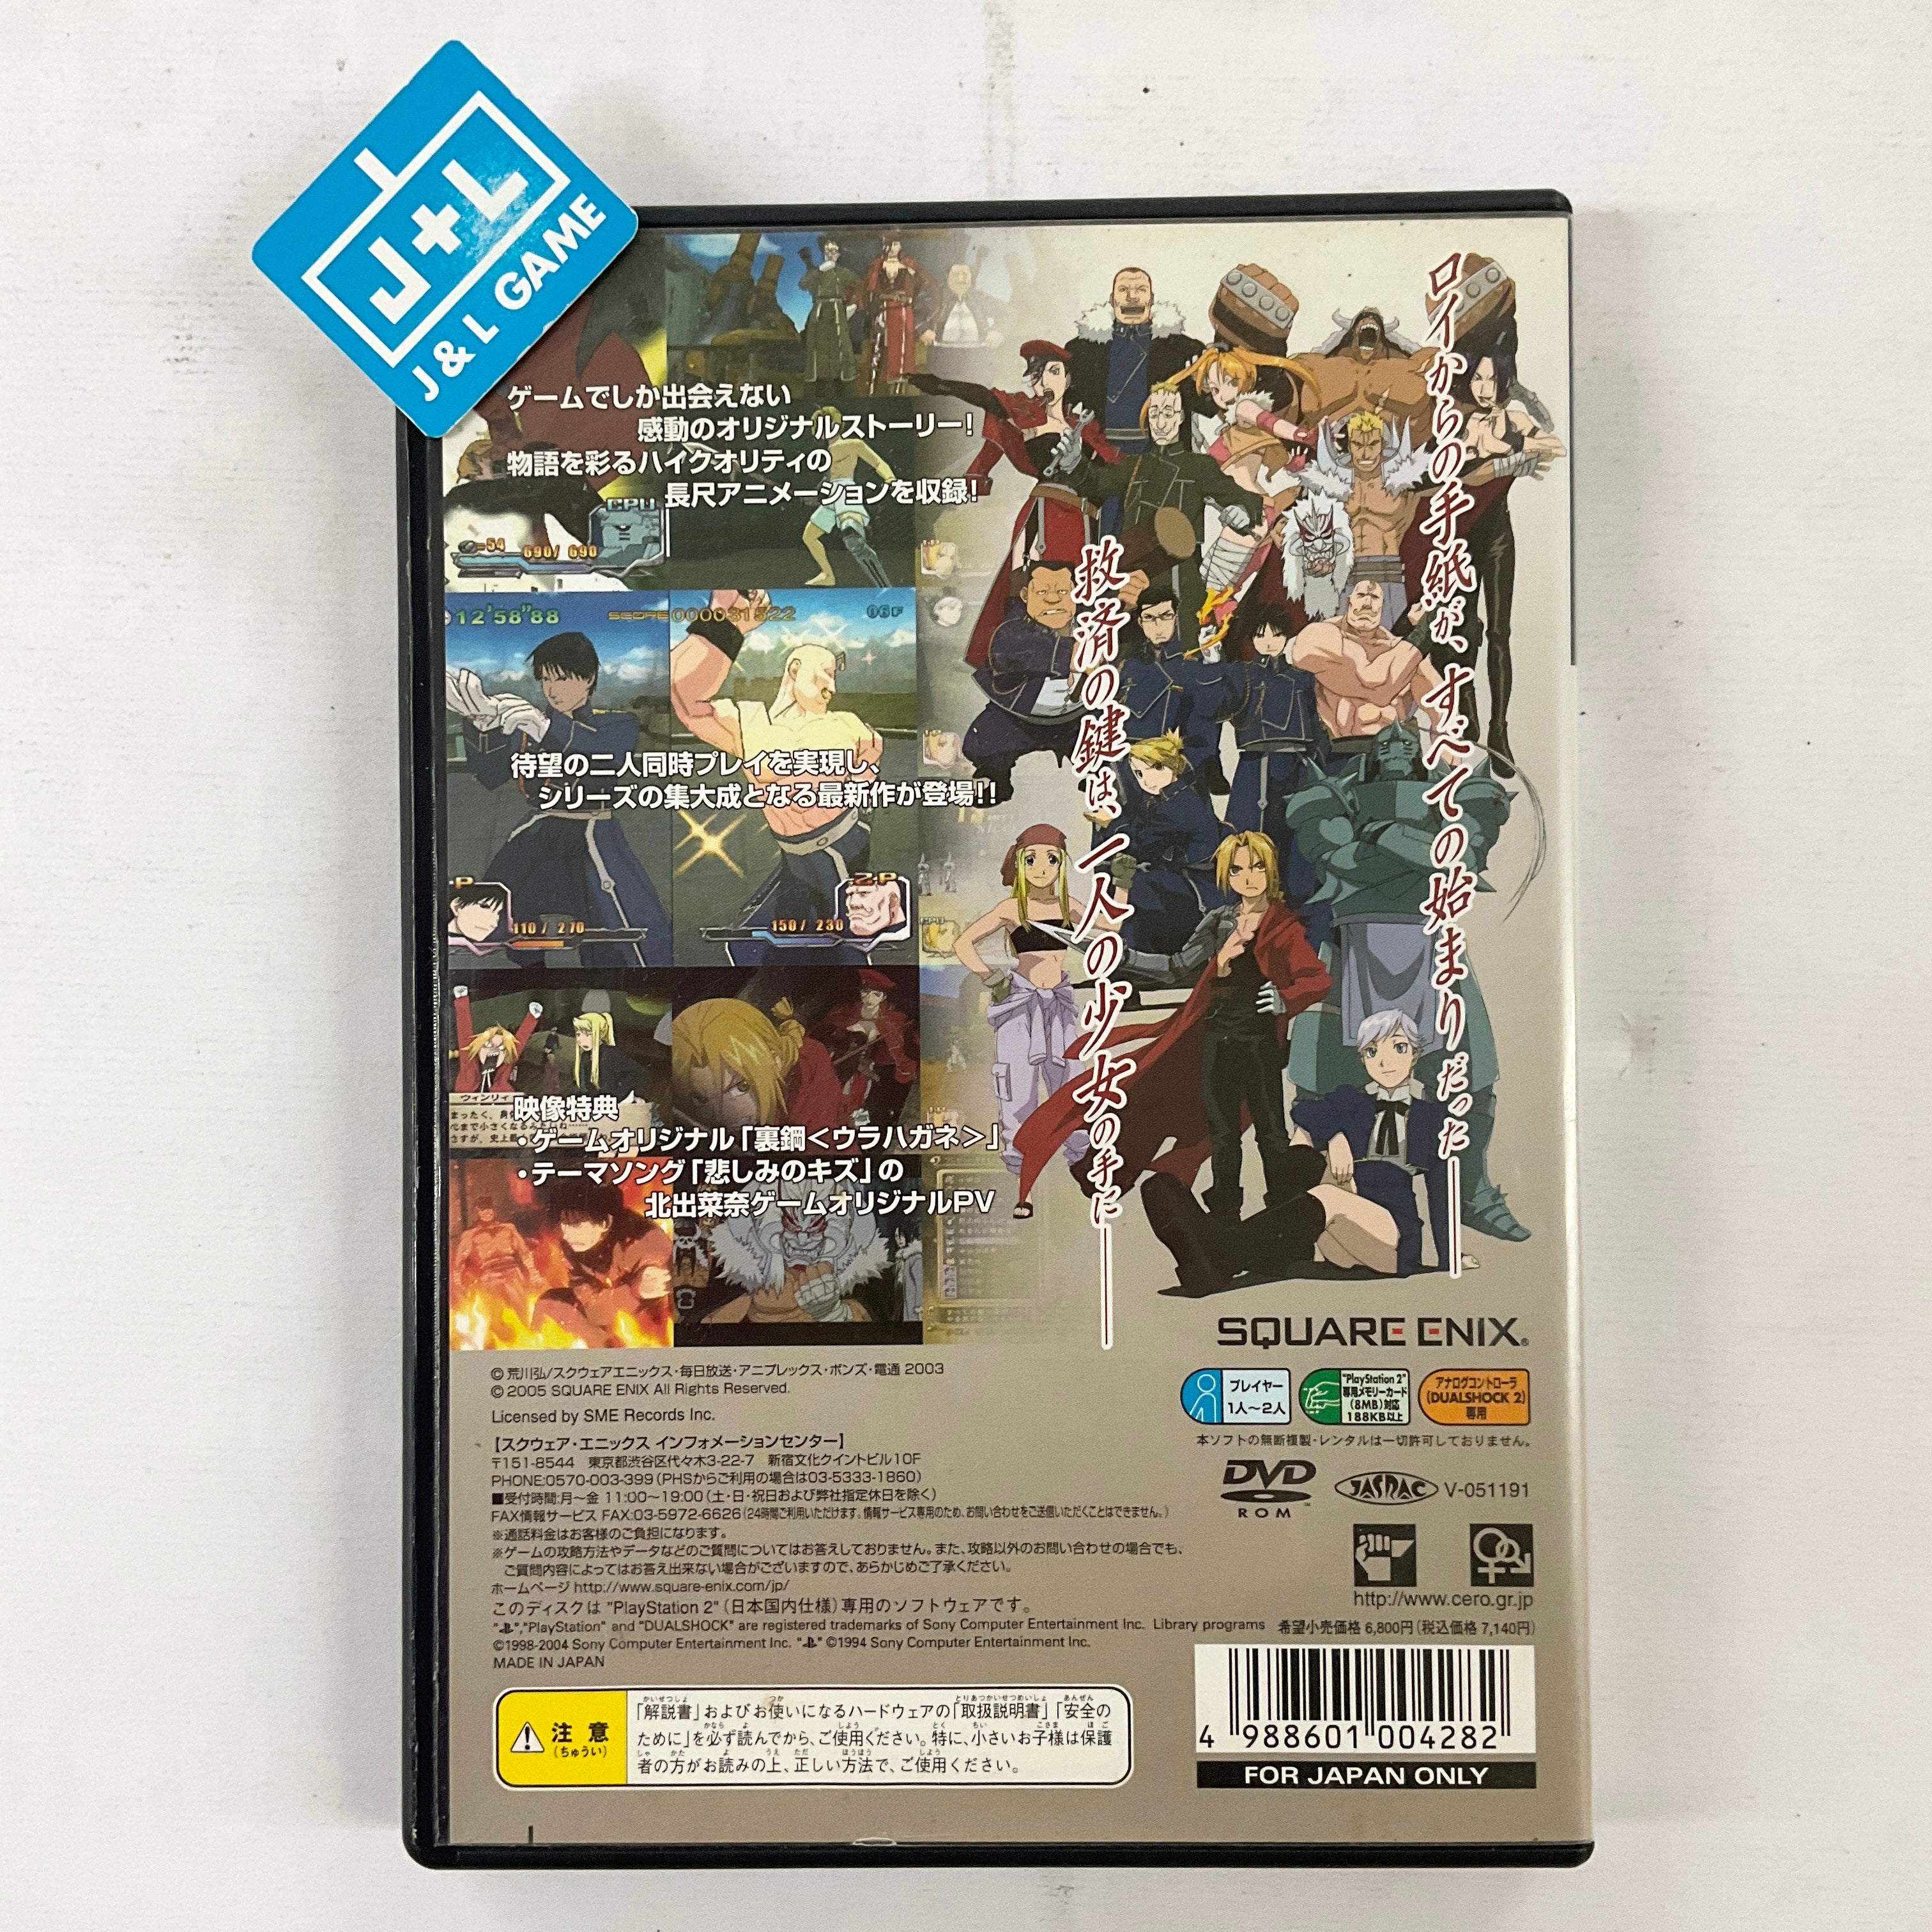 Hagane no Renkinjutsushi 3: Kami o Tsugu Shoujo - (PS2) PlayStation 2 [Pre-Owned] (Japanese Import) Video Games Square Enix   